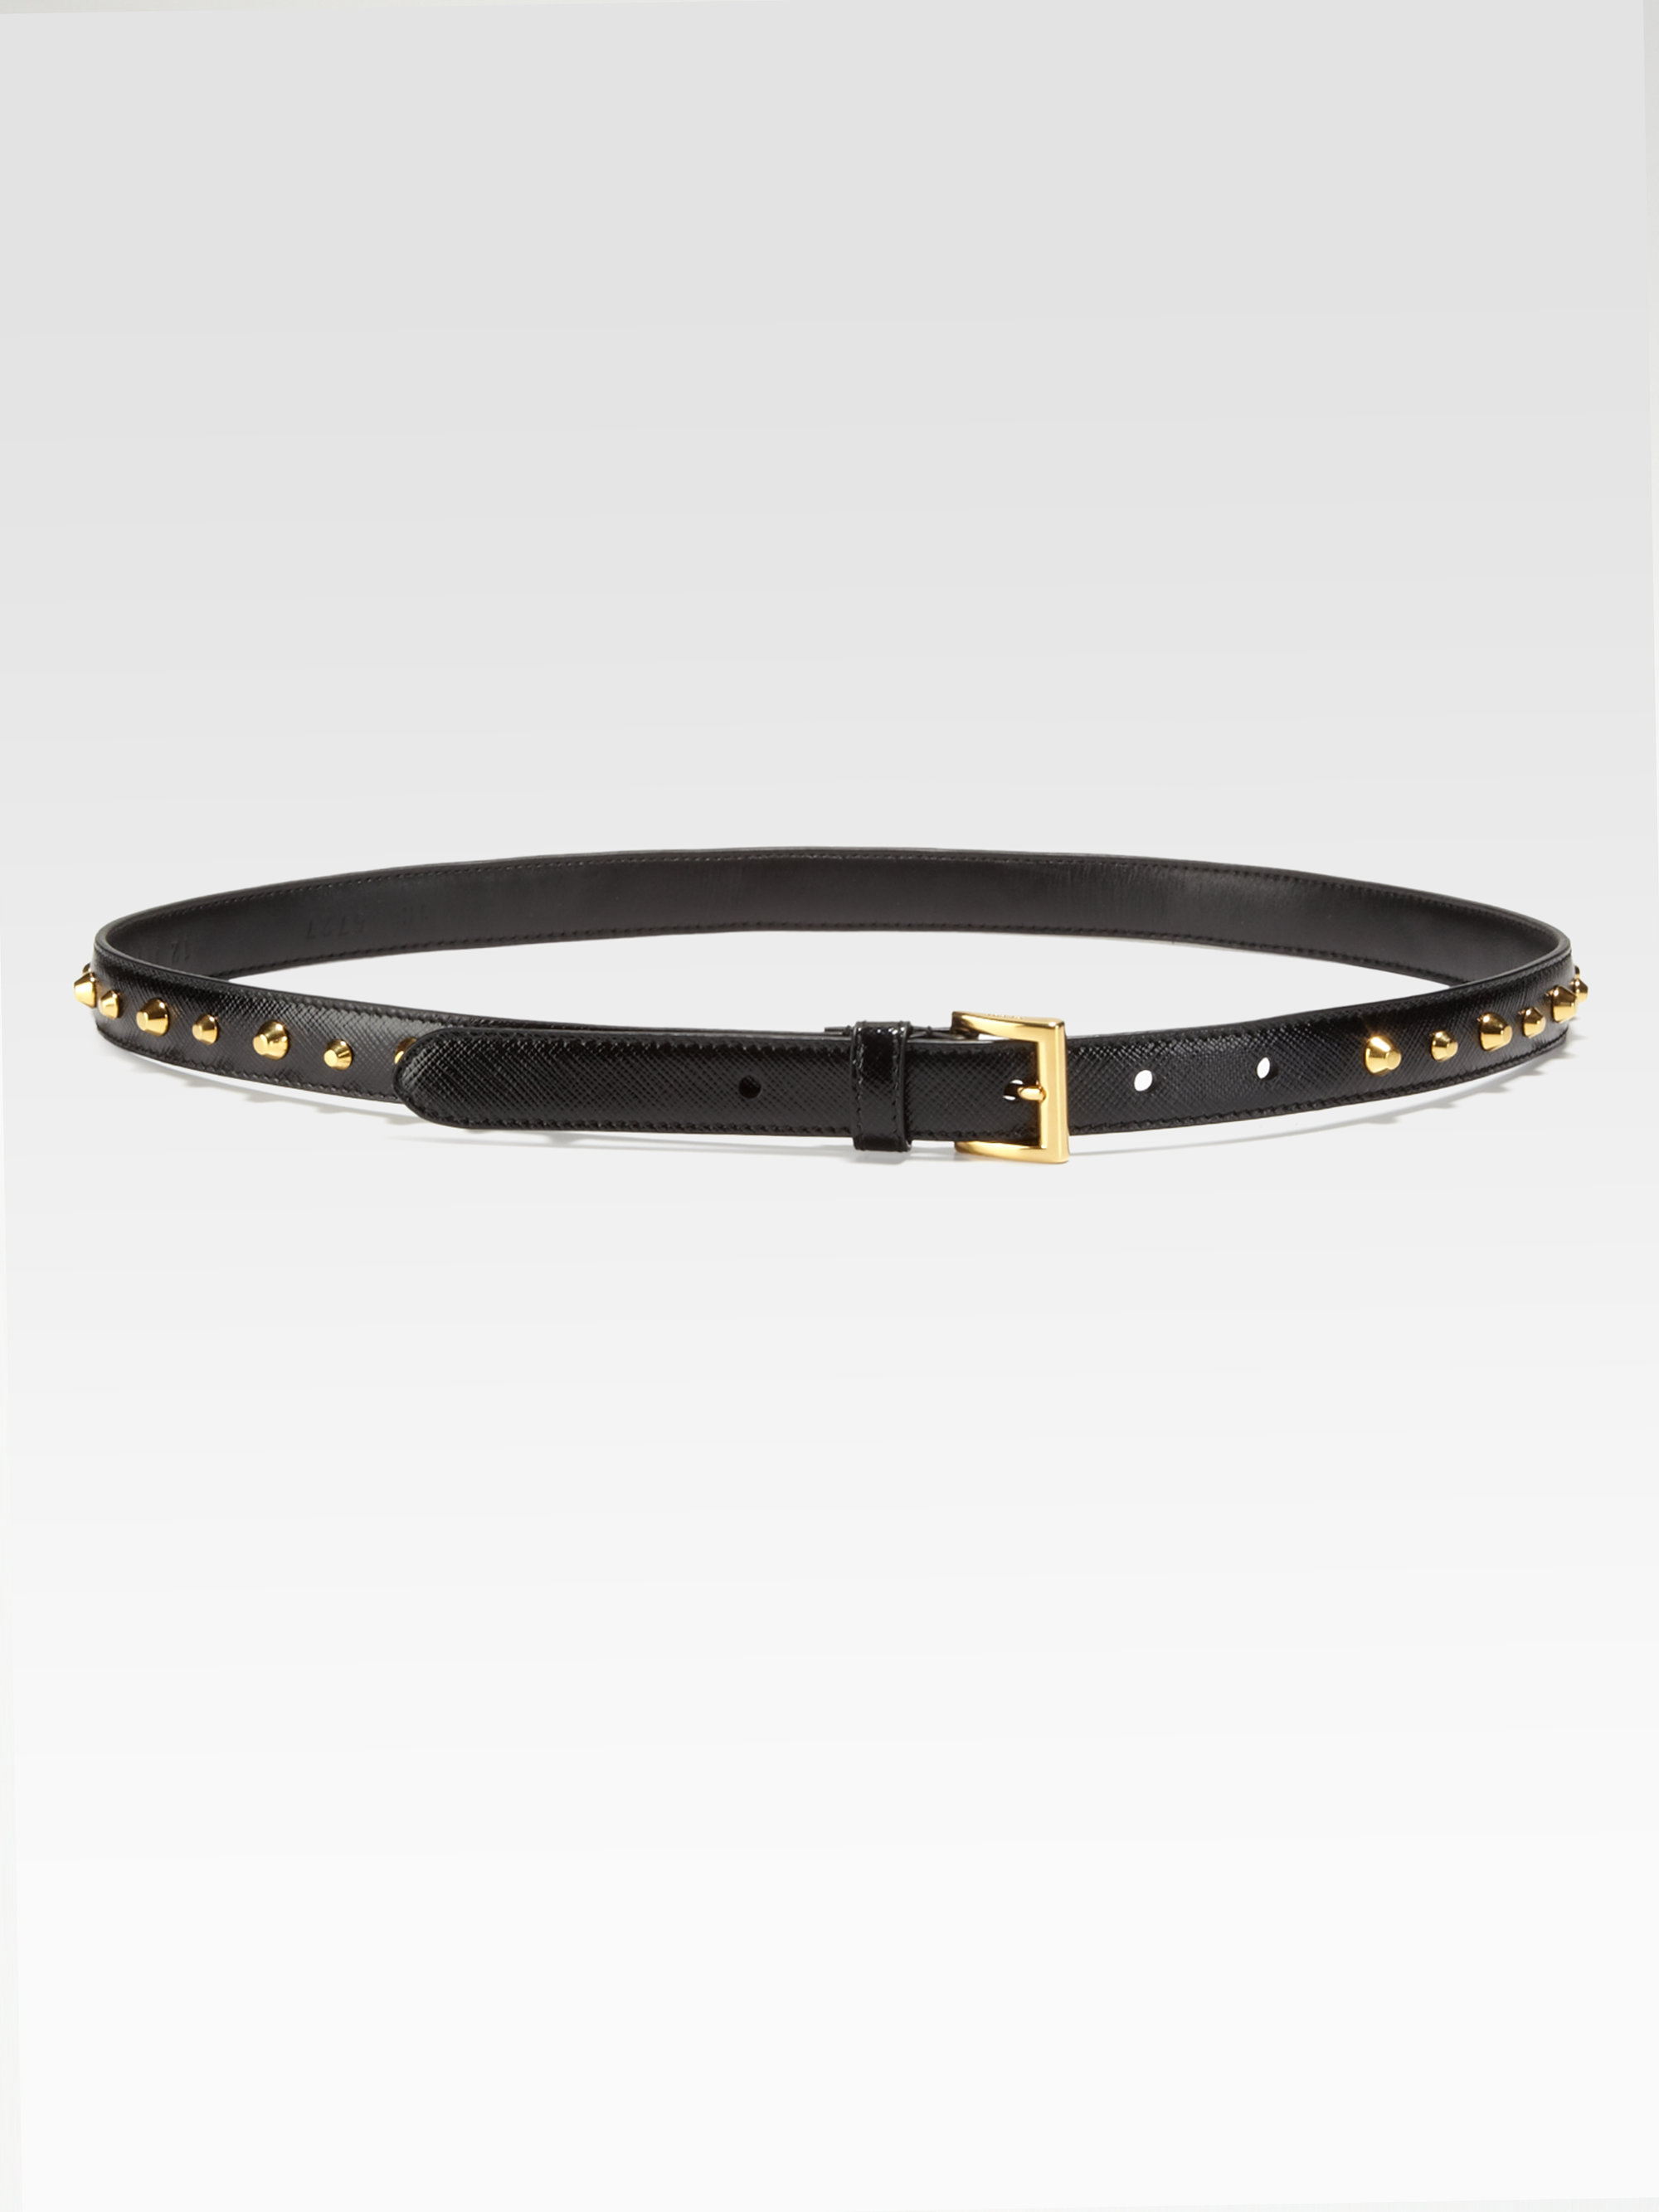 Prada Cinture Studded Saffiano Leather Belt in Black | Lyst  